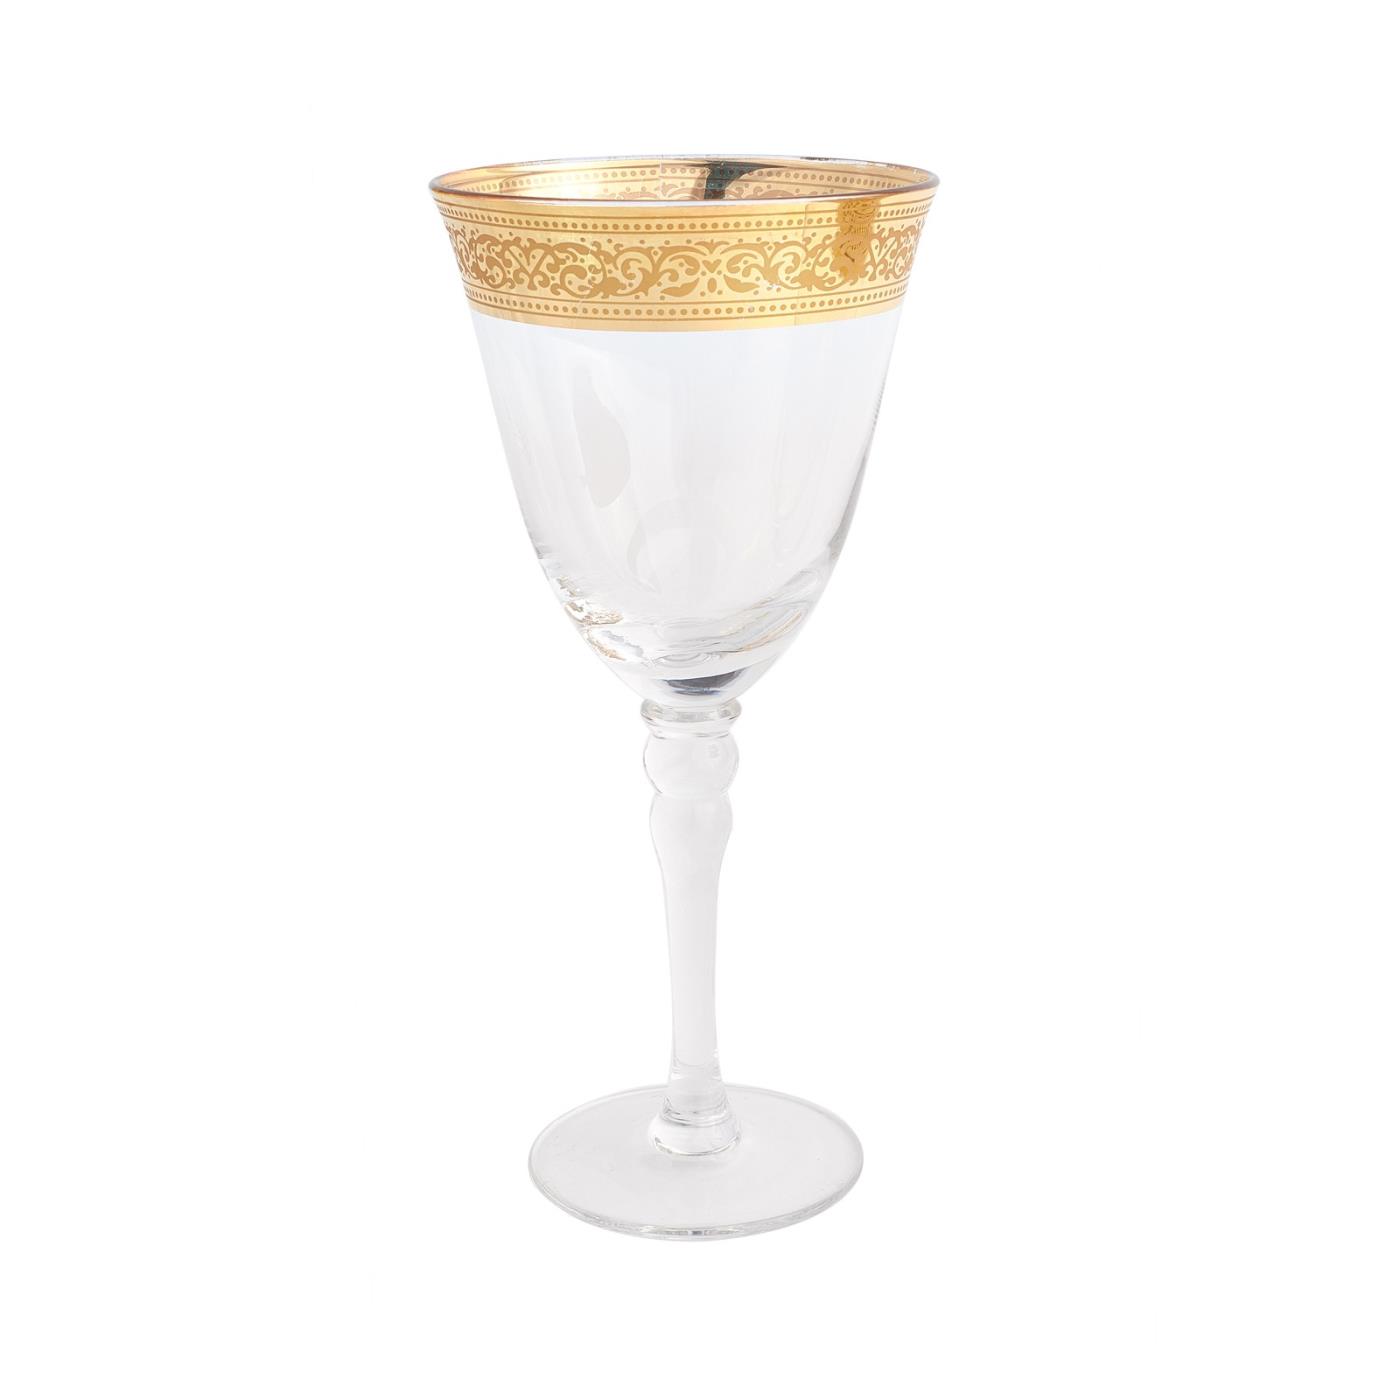 Majestic Gold - White Wine Glass 8 oz